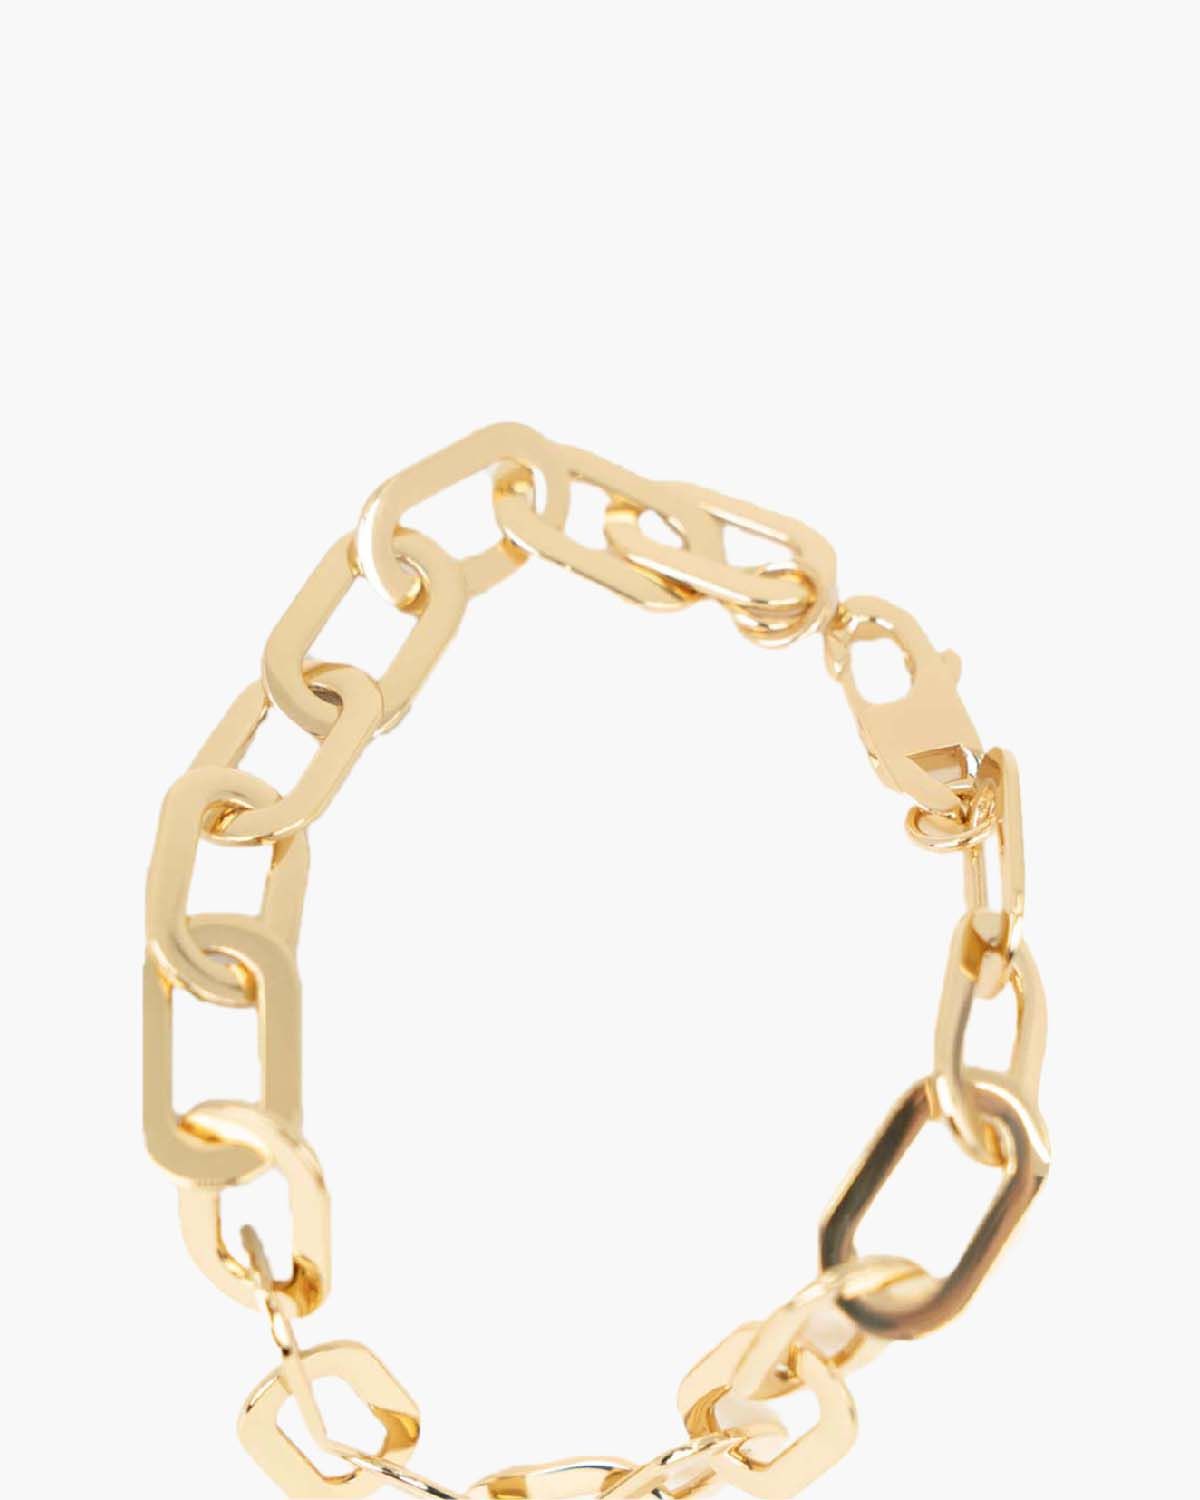 Amara Chain Necklace Goud Ketting